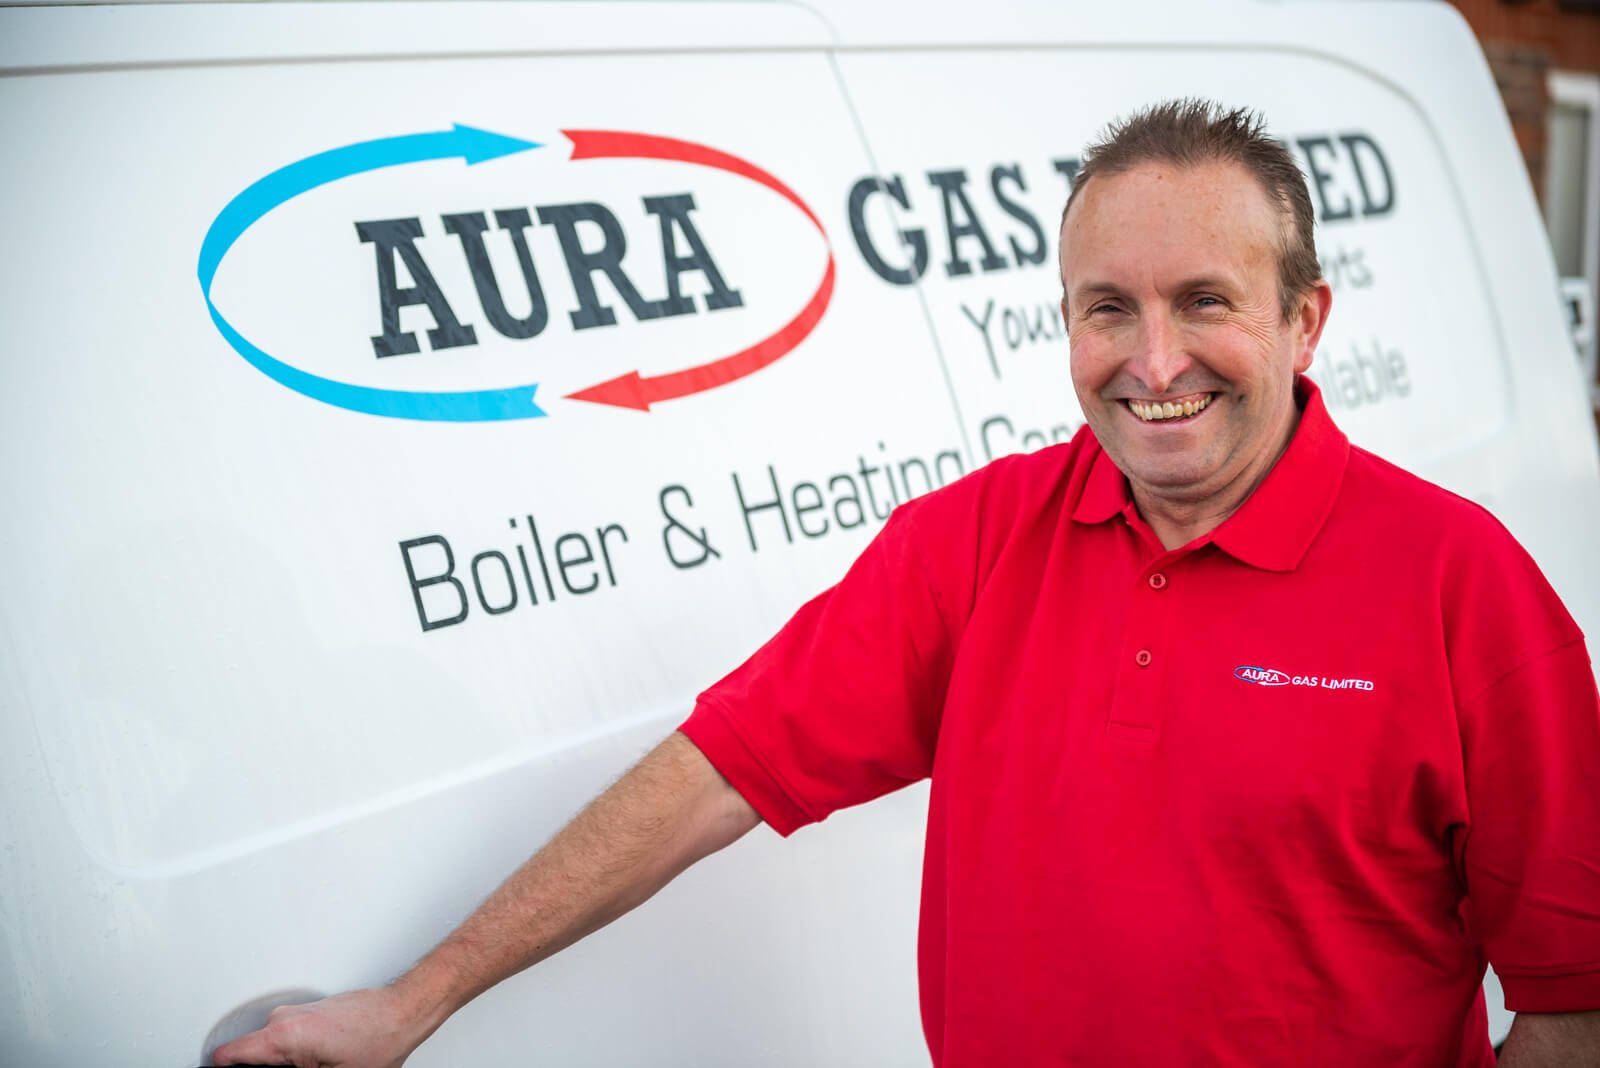 natural head shot photo of aura gas employee